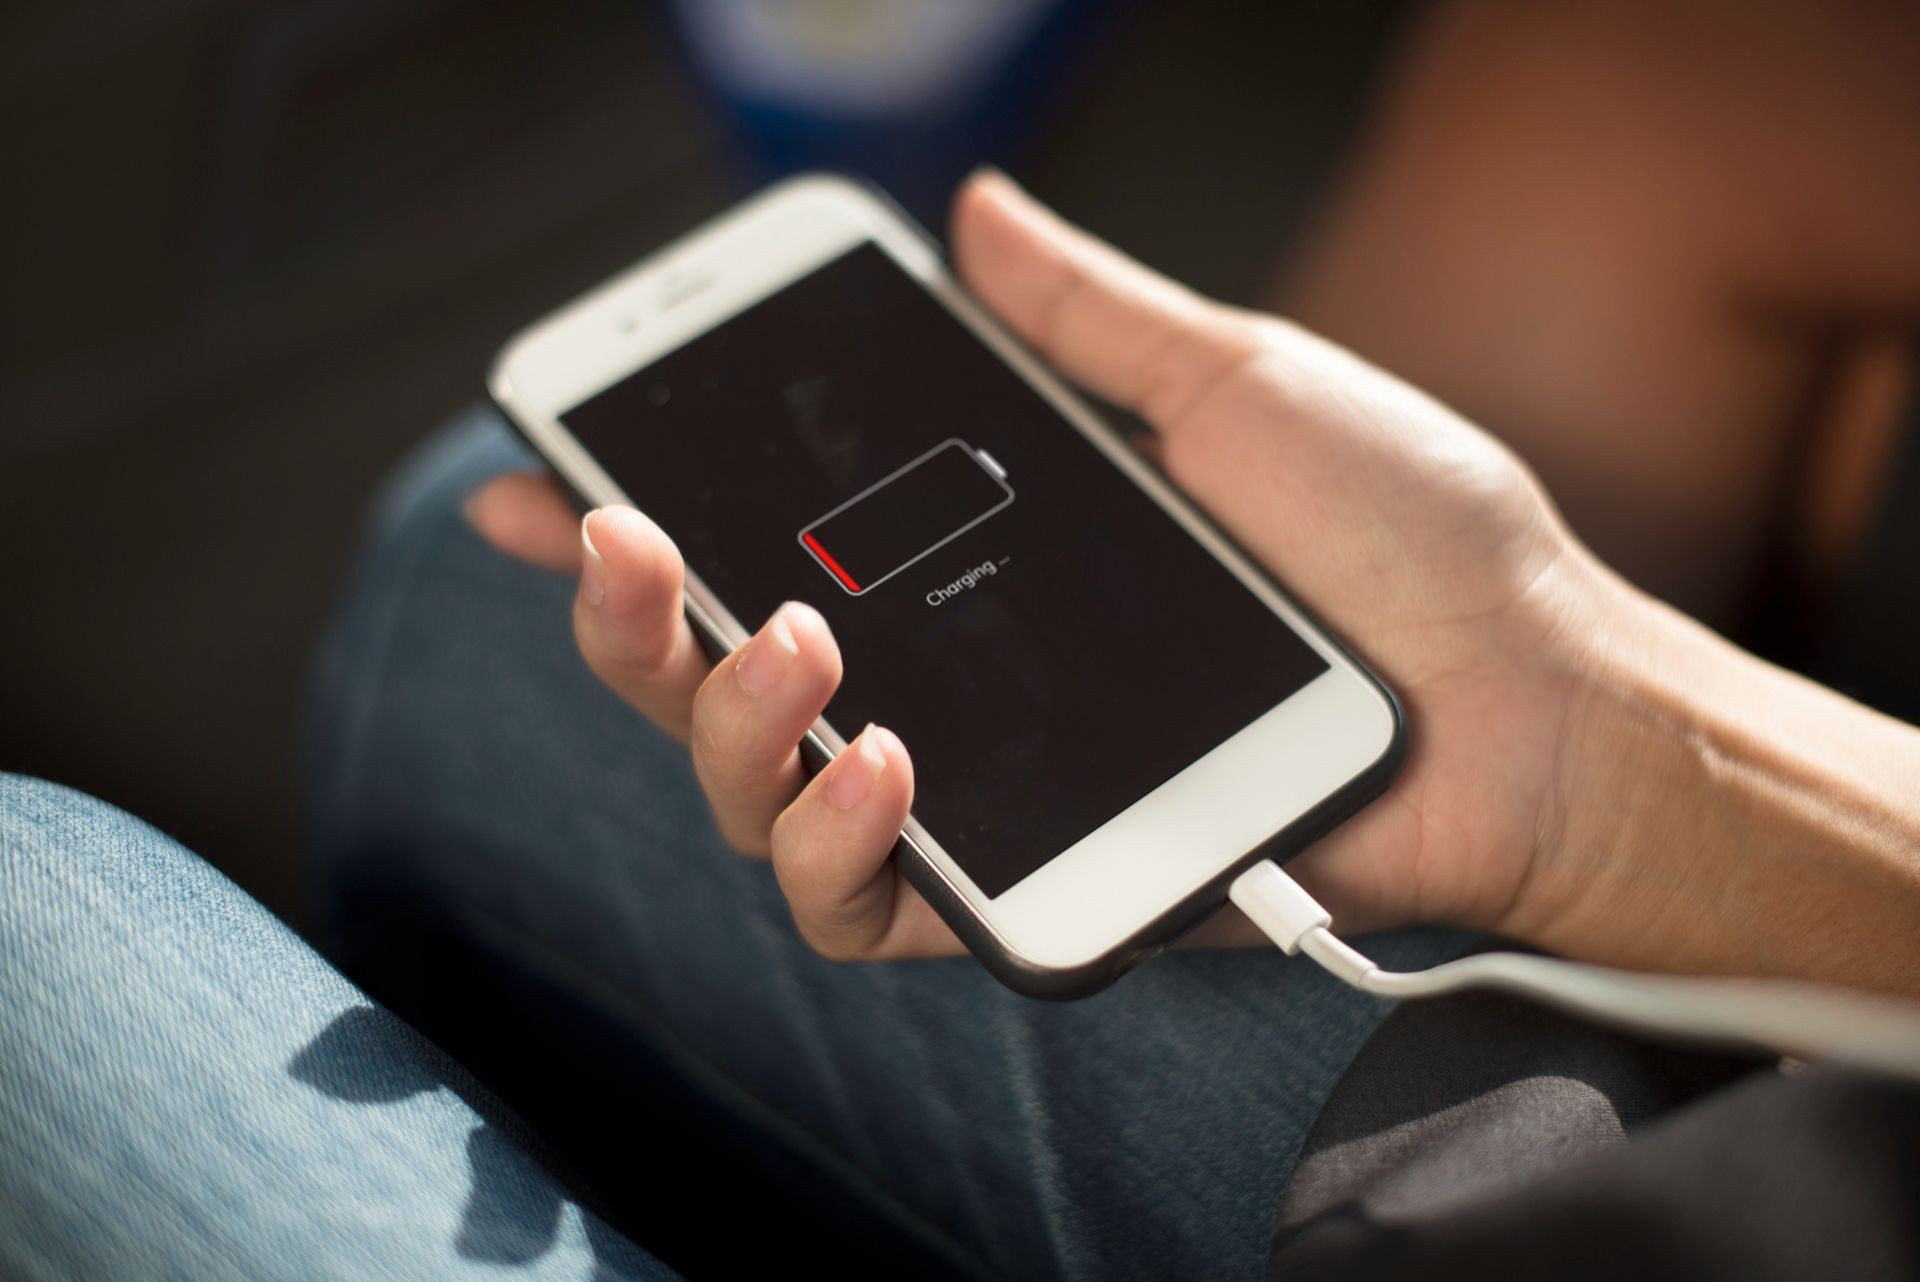 iPhone batterygate lawsuit